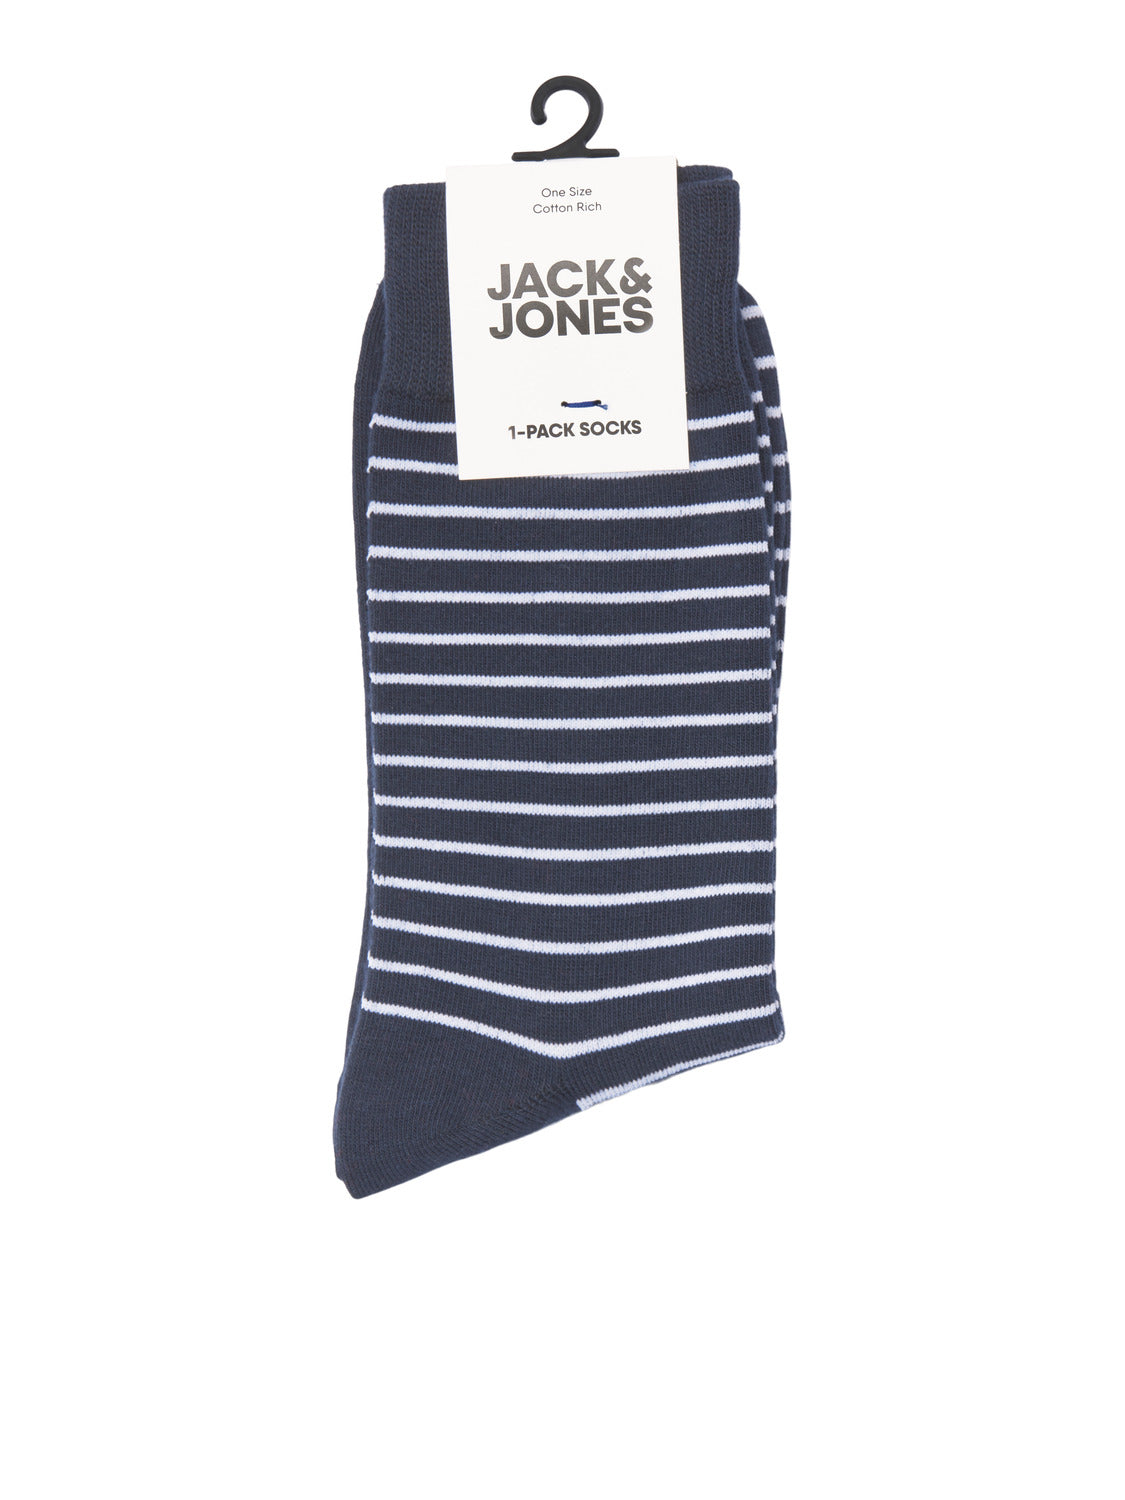 JACFINN Socks - Navy Blazer